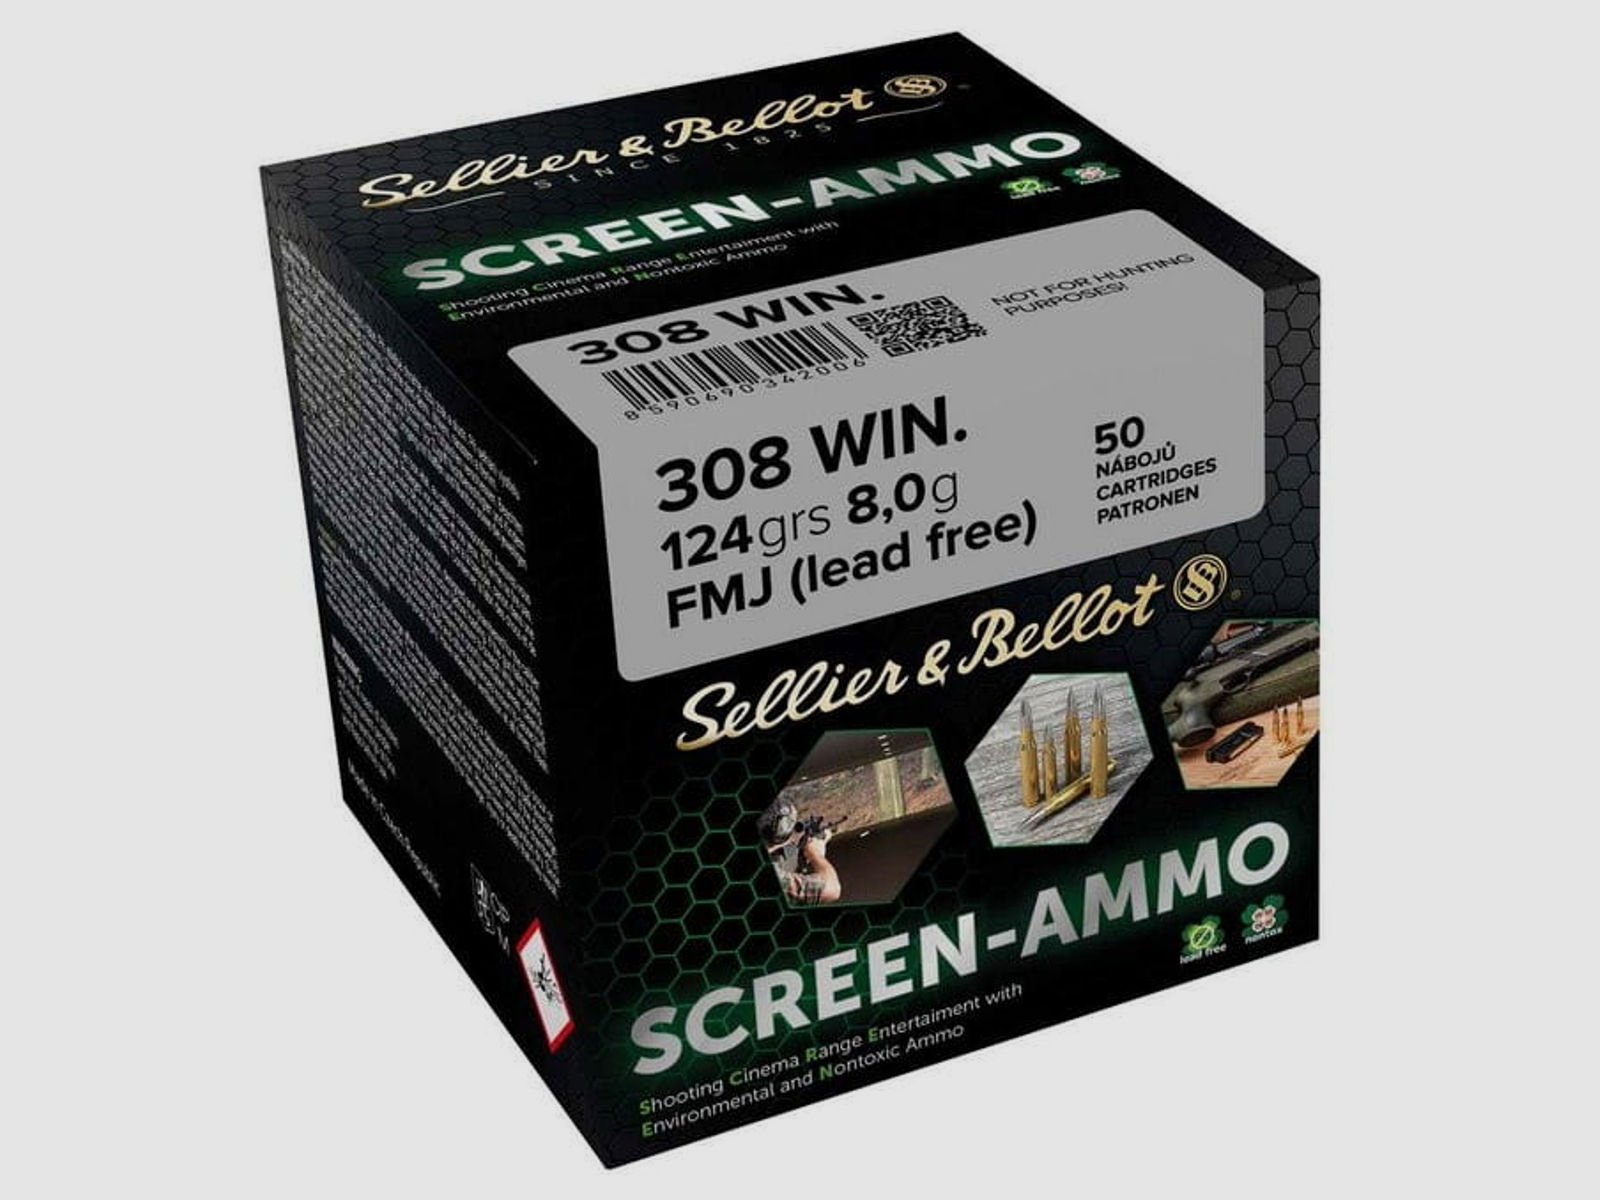 S&B Screen-Ammo .308 Win. FMJ Zink 124 grs.